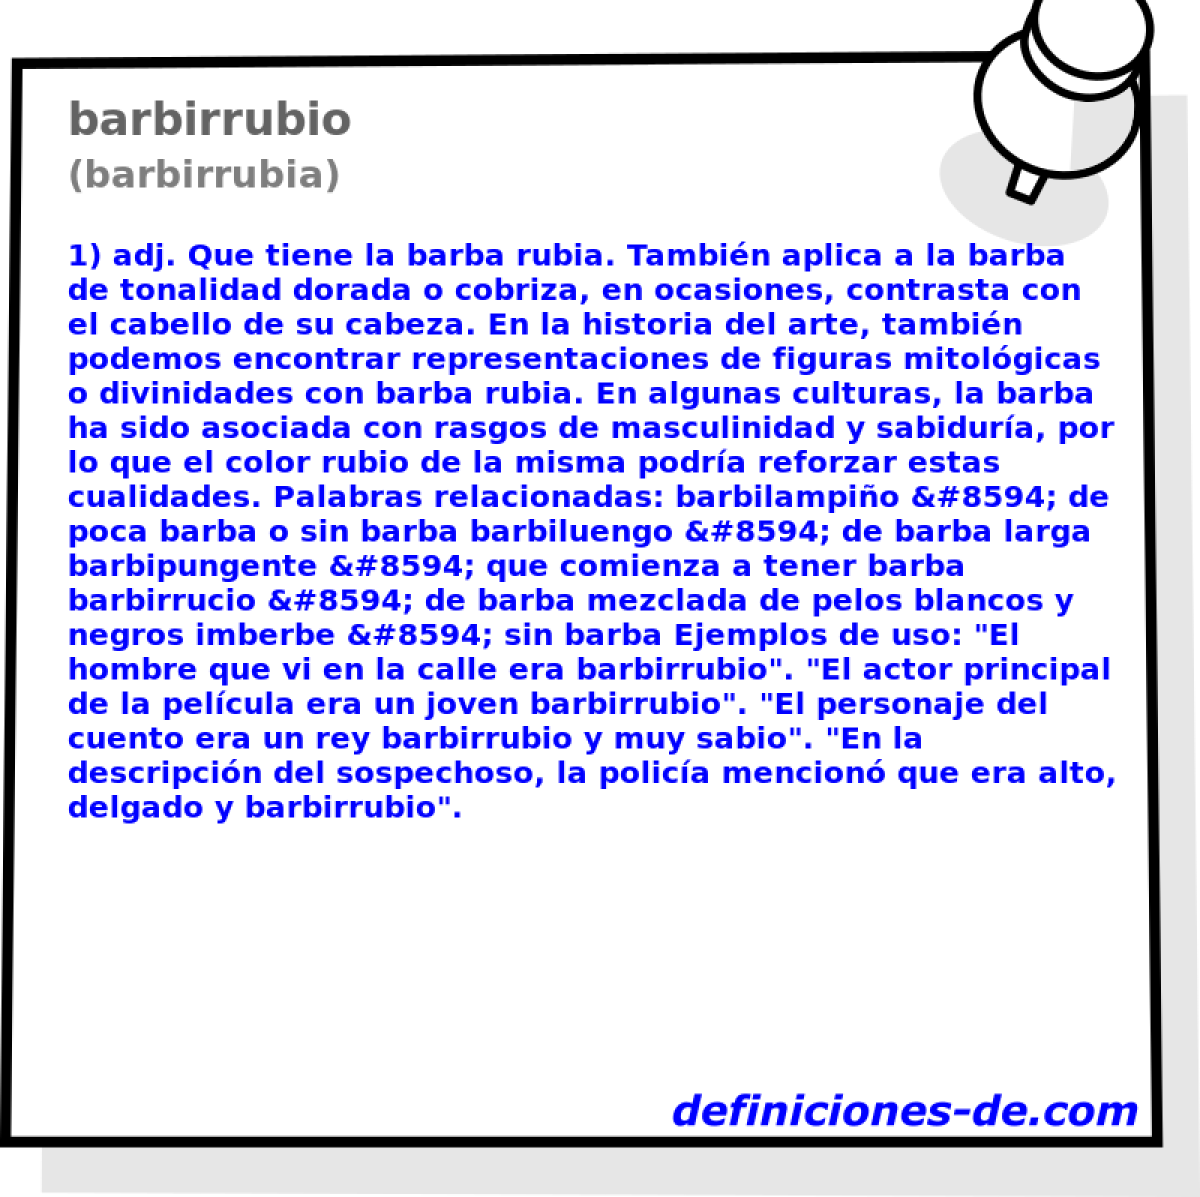 barbirrubio (barbirrubia)